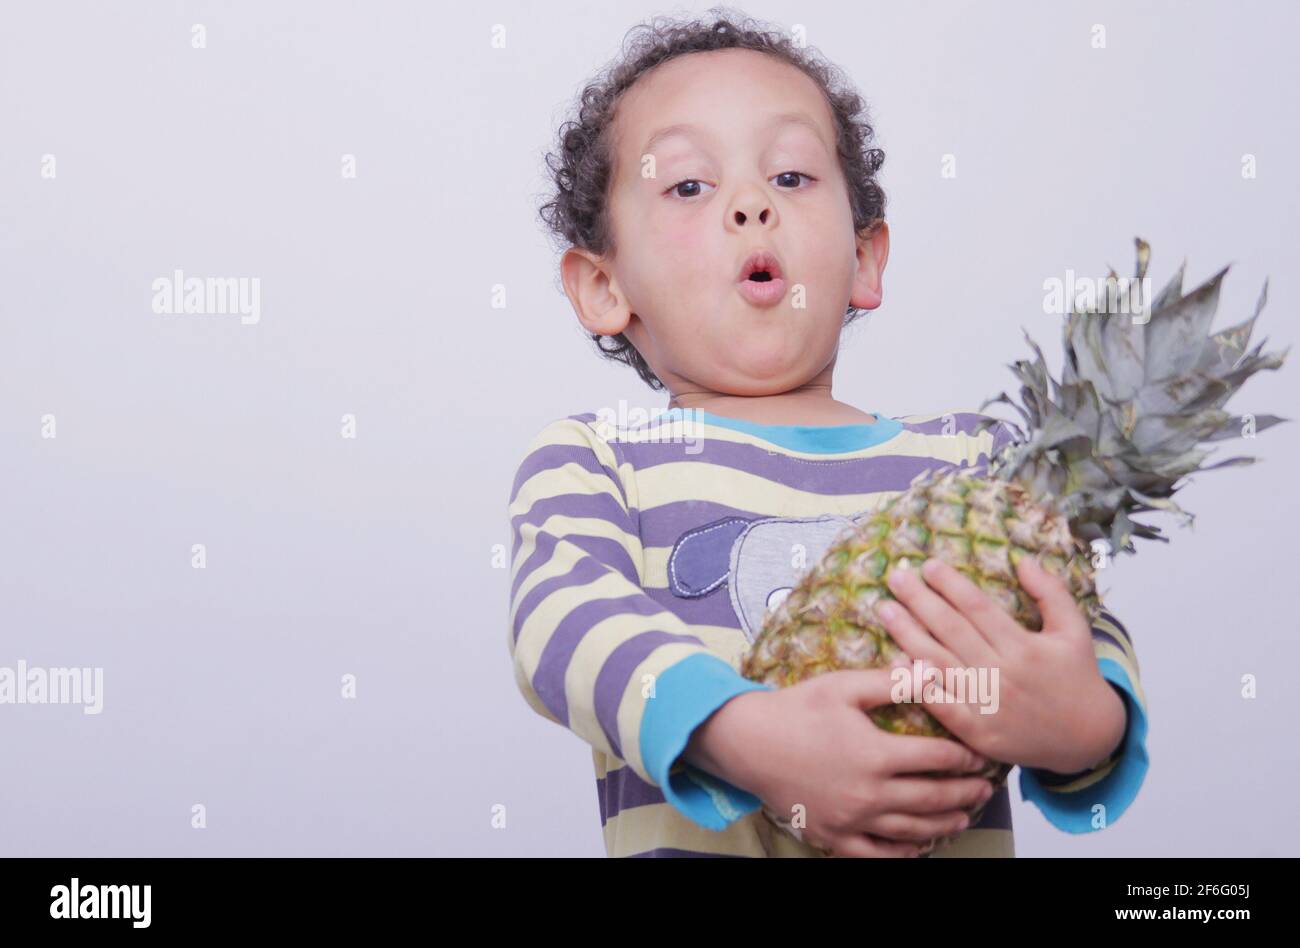 little boy holding a pineapple on white background stock image stock photo Stock Photo